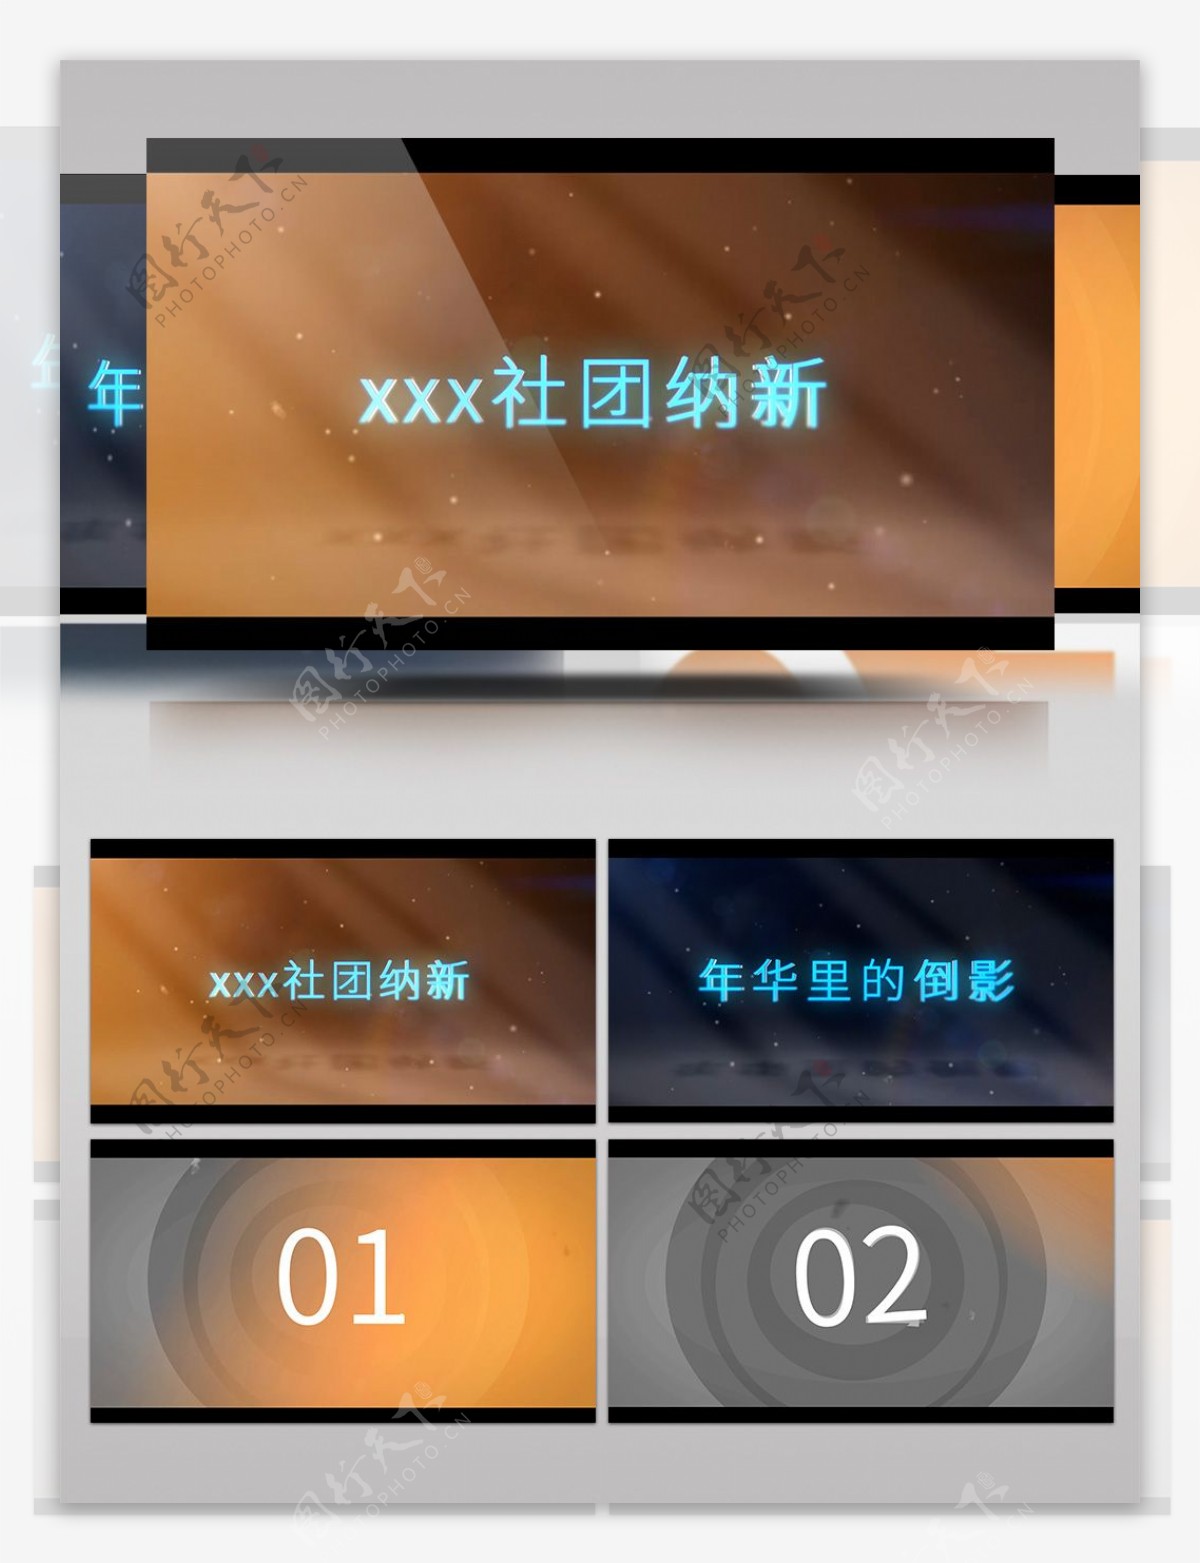 xxx社团纳新宣传AE模板